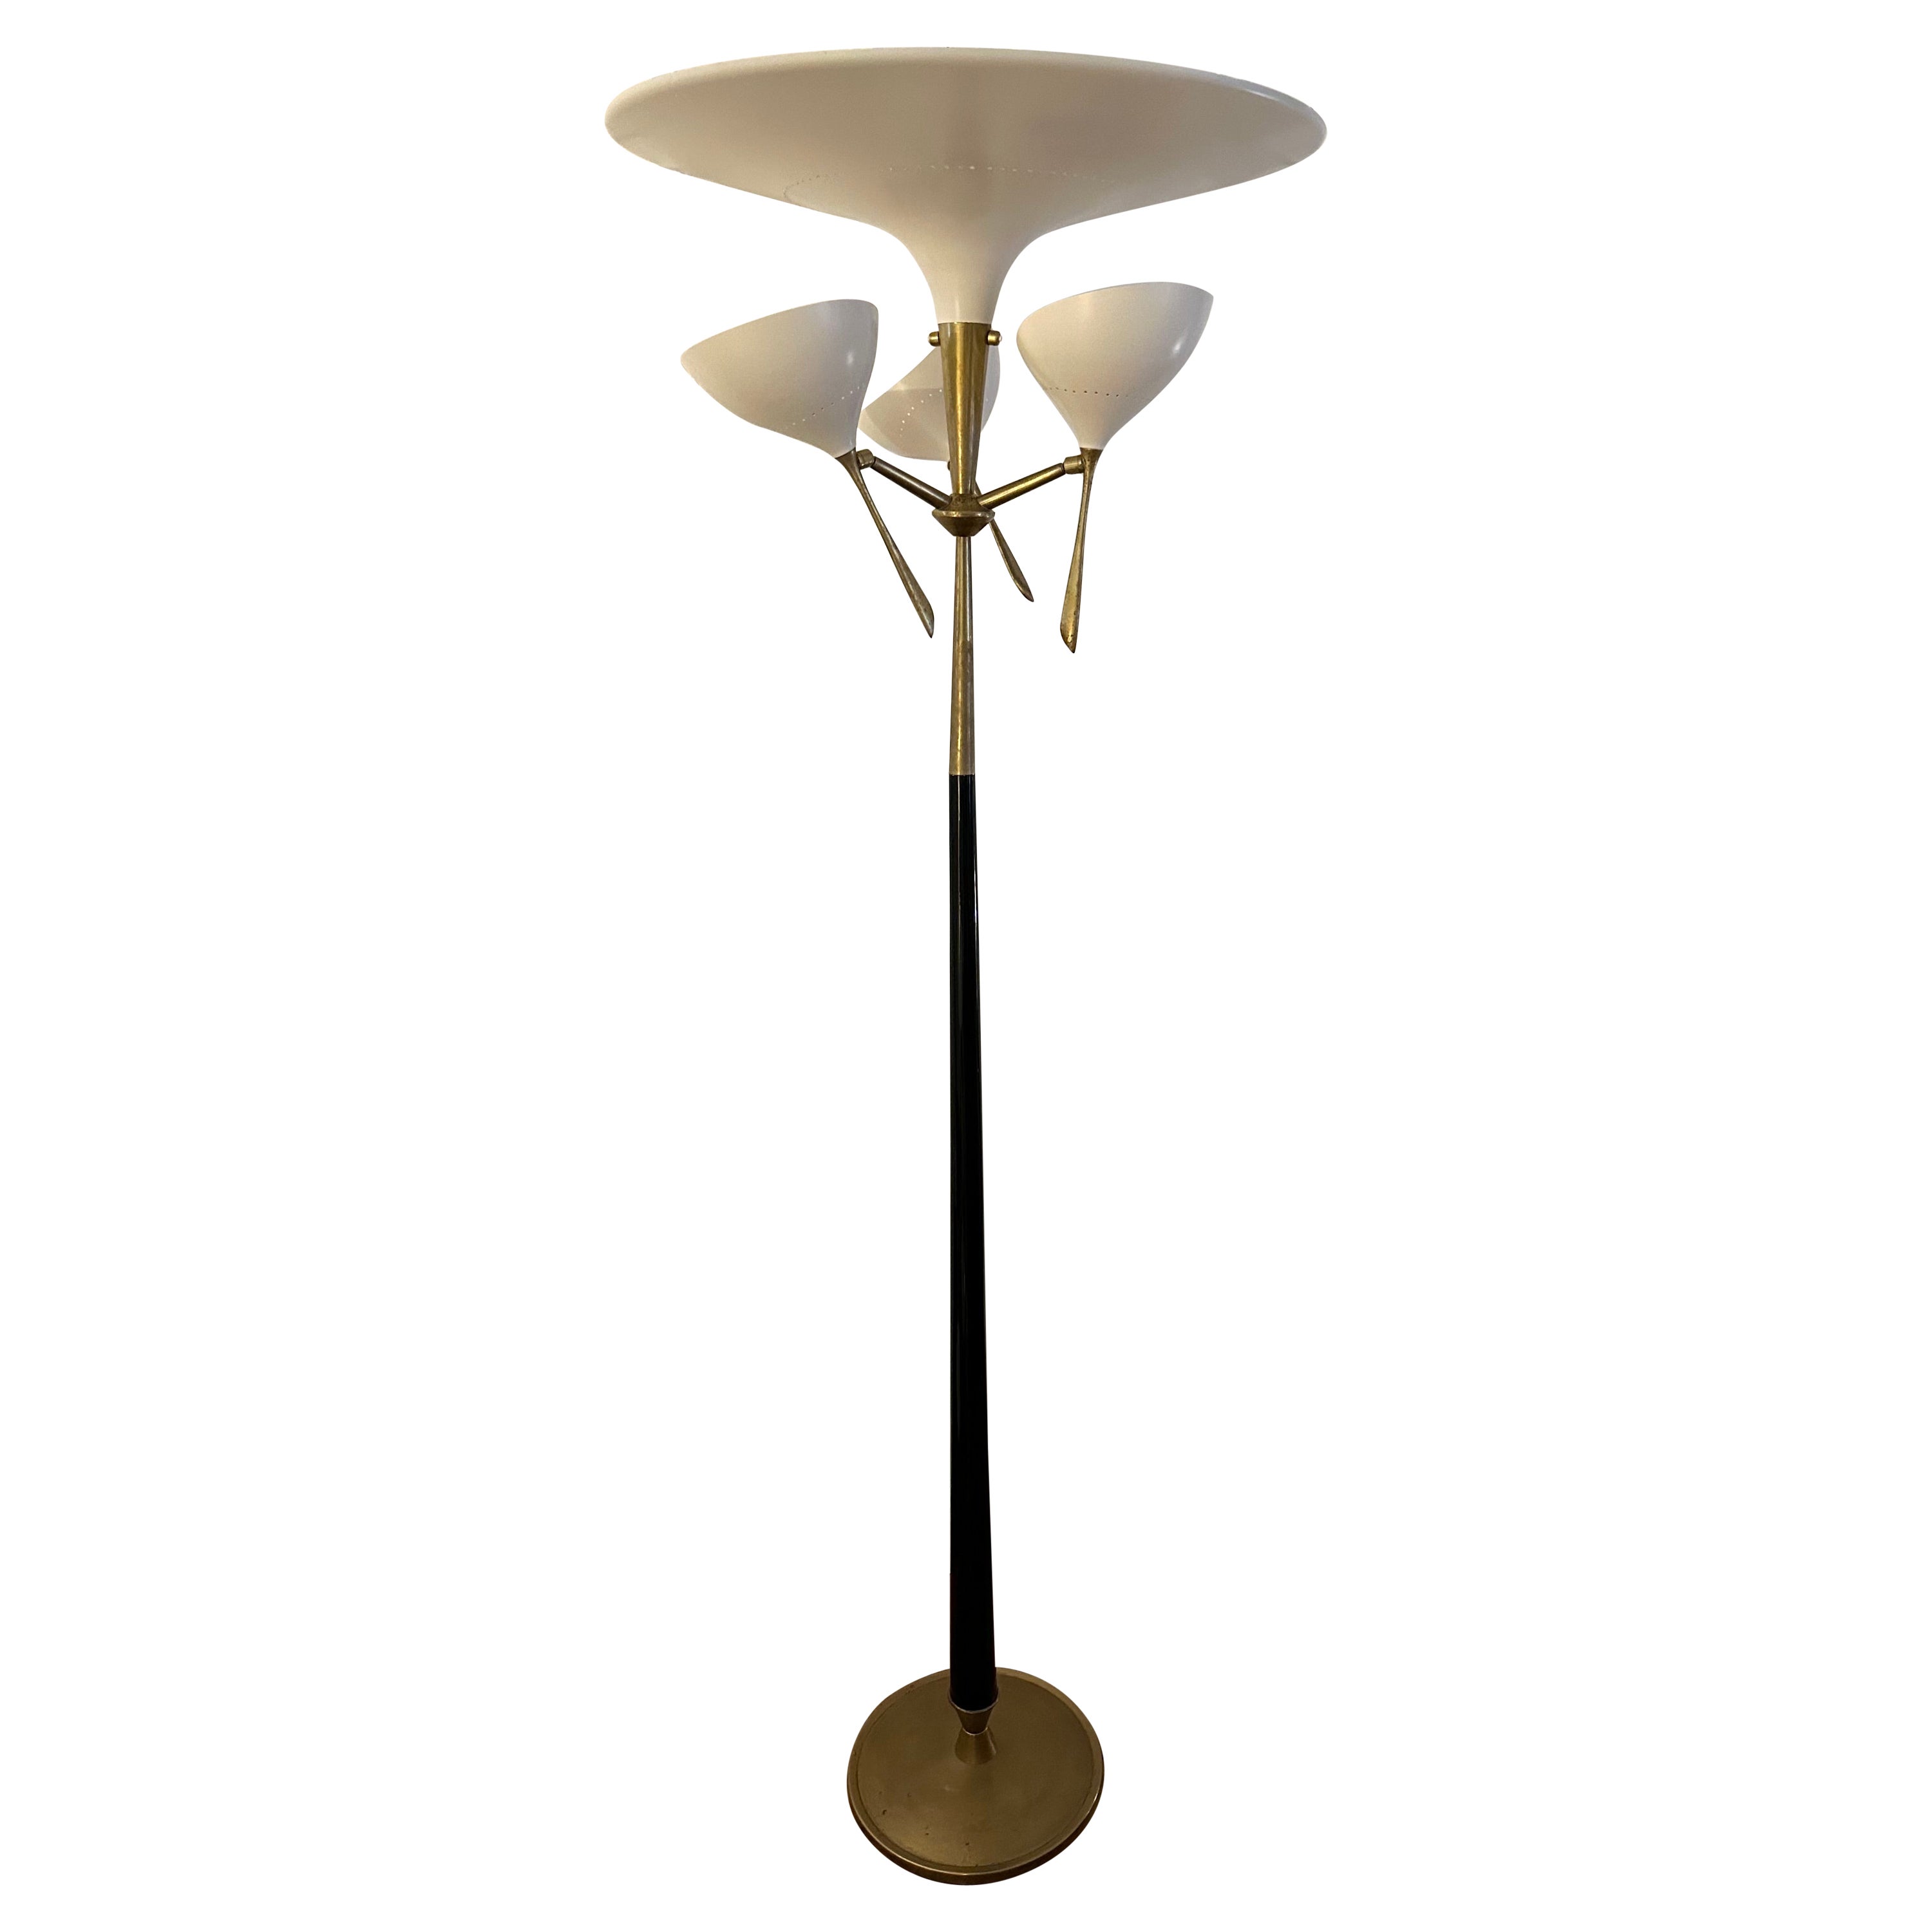 Italian Mid-Century Modern Metal and Brass Floor Lamp by Lumen, 1950s For Sale